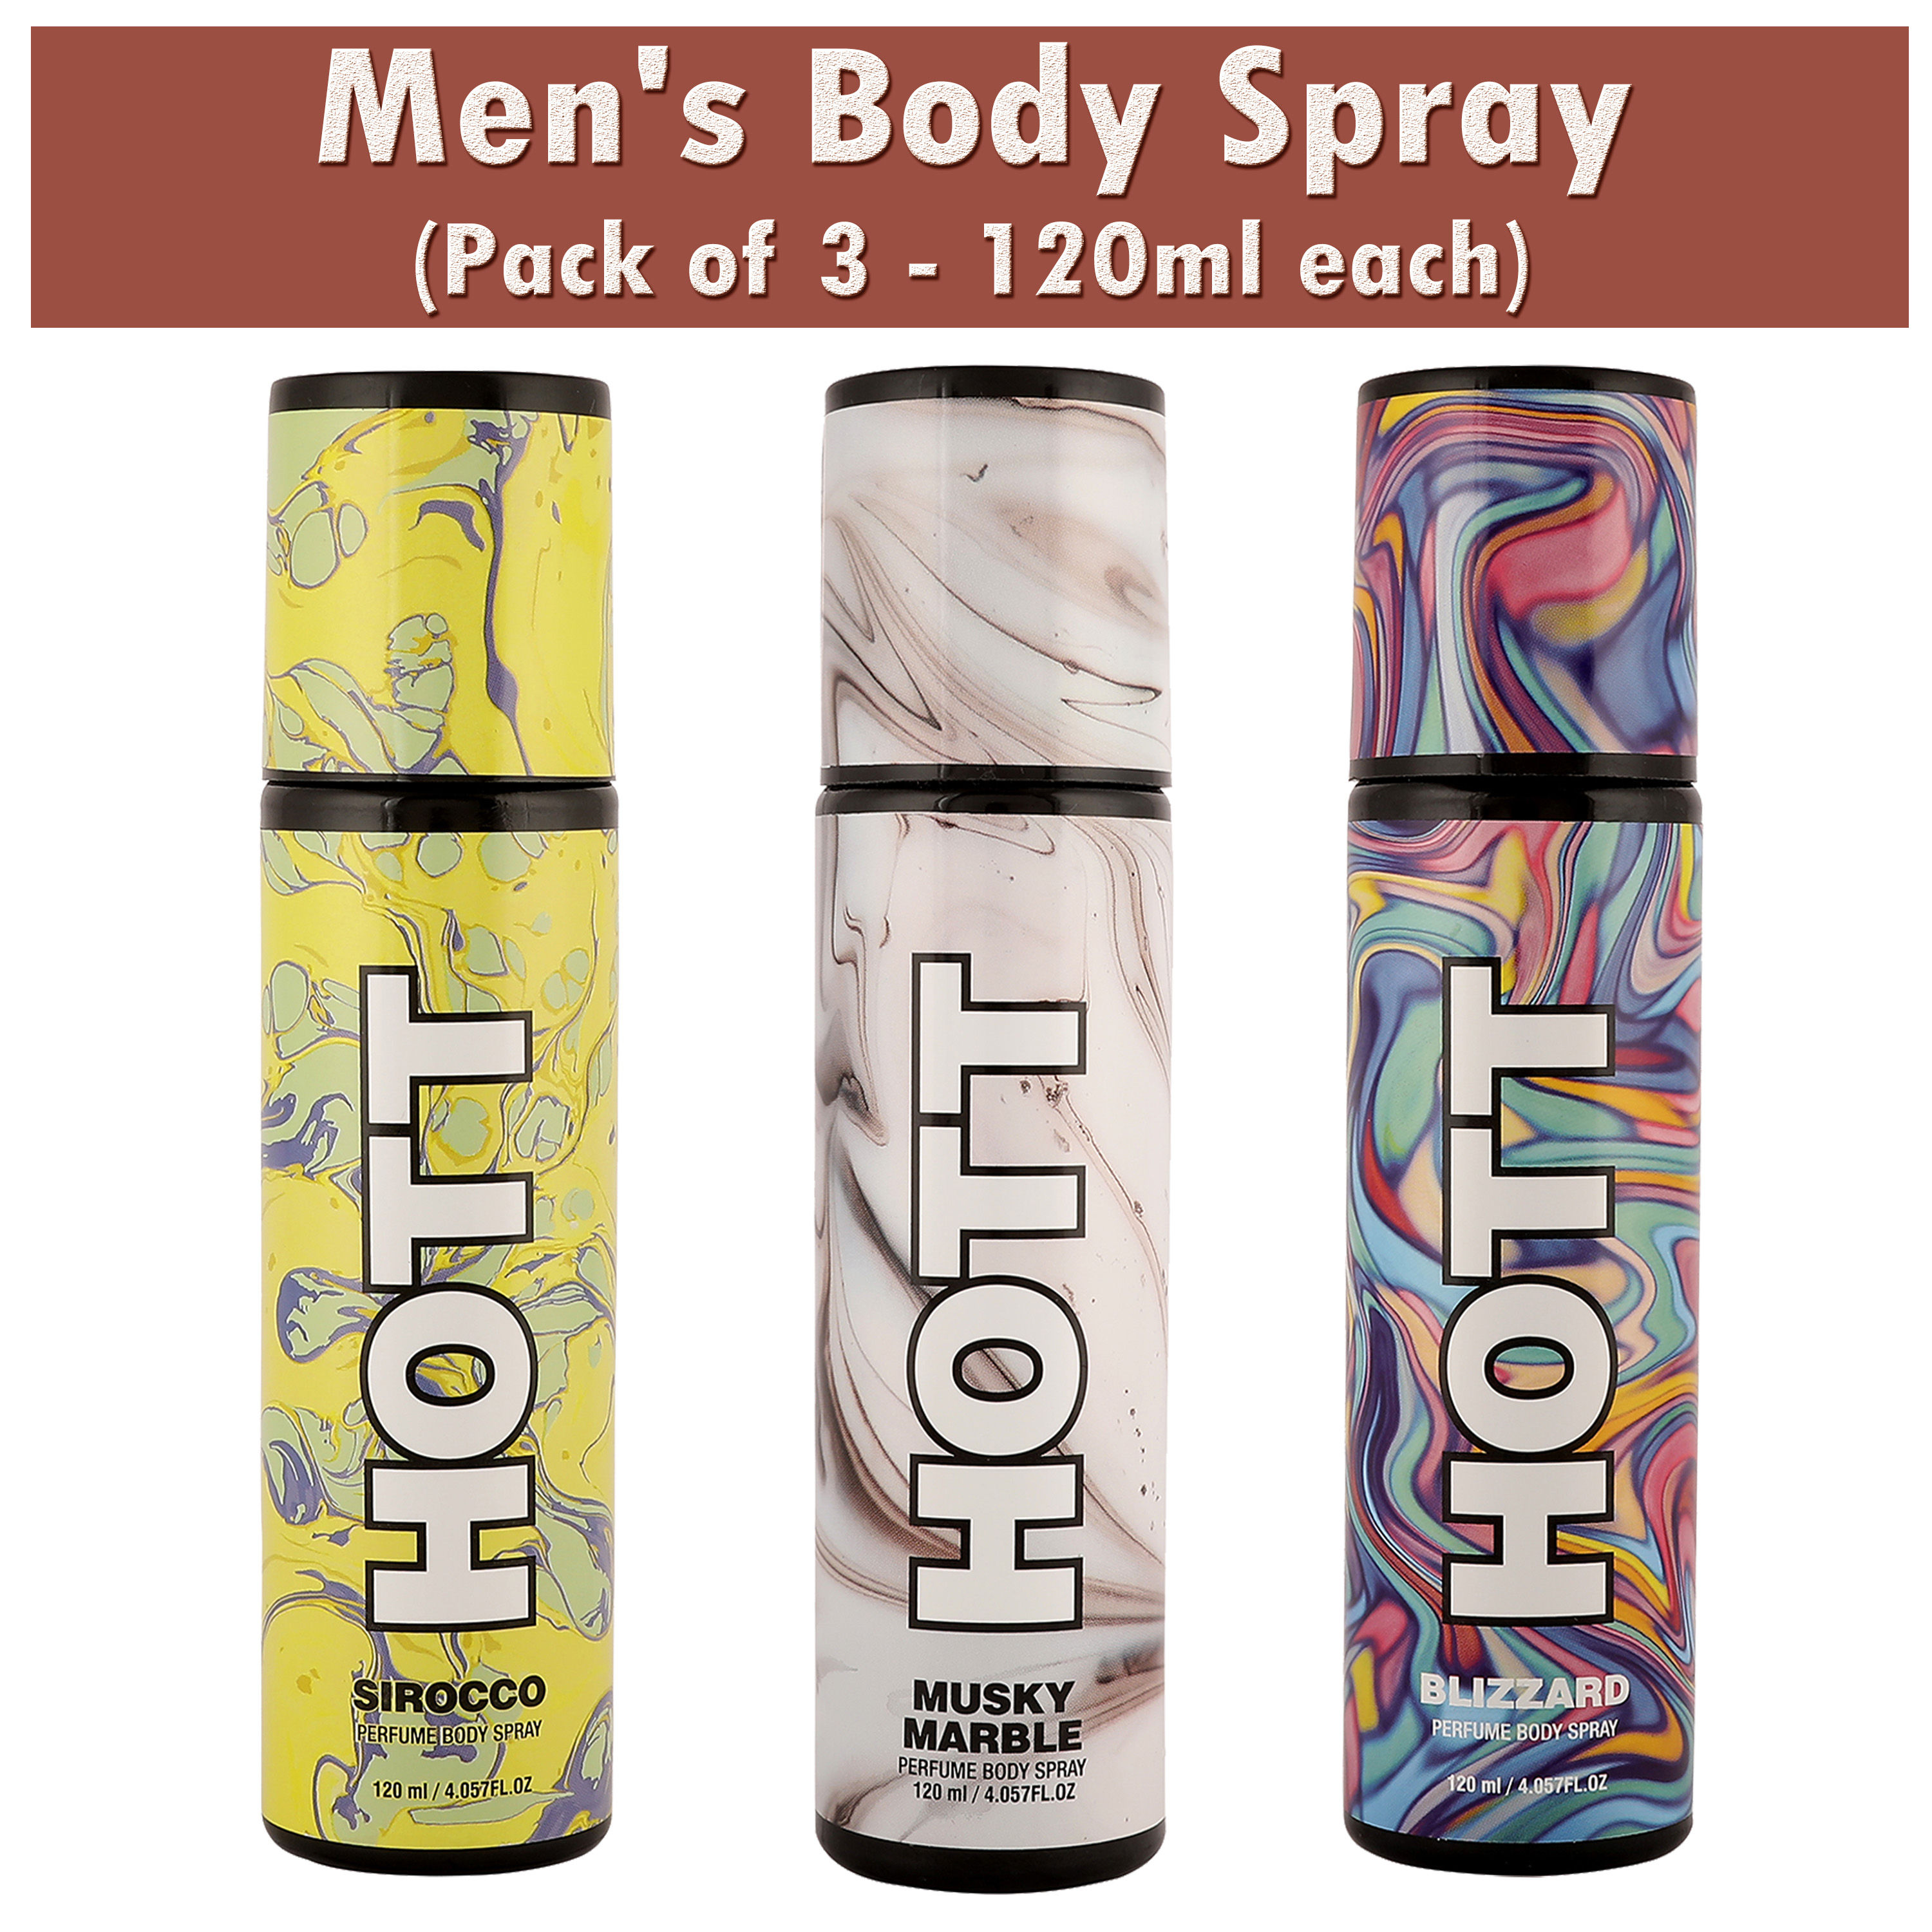 HOTT Musky Marbl , Sirocco, Blizzard Perfume Body Spray For Men (Pack Of 3)